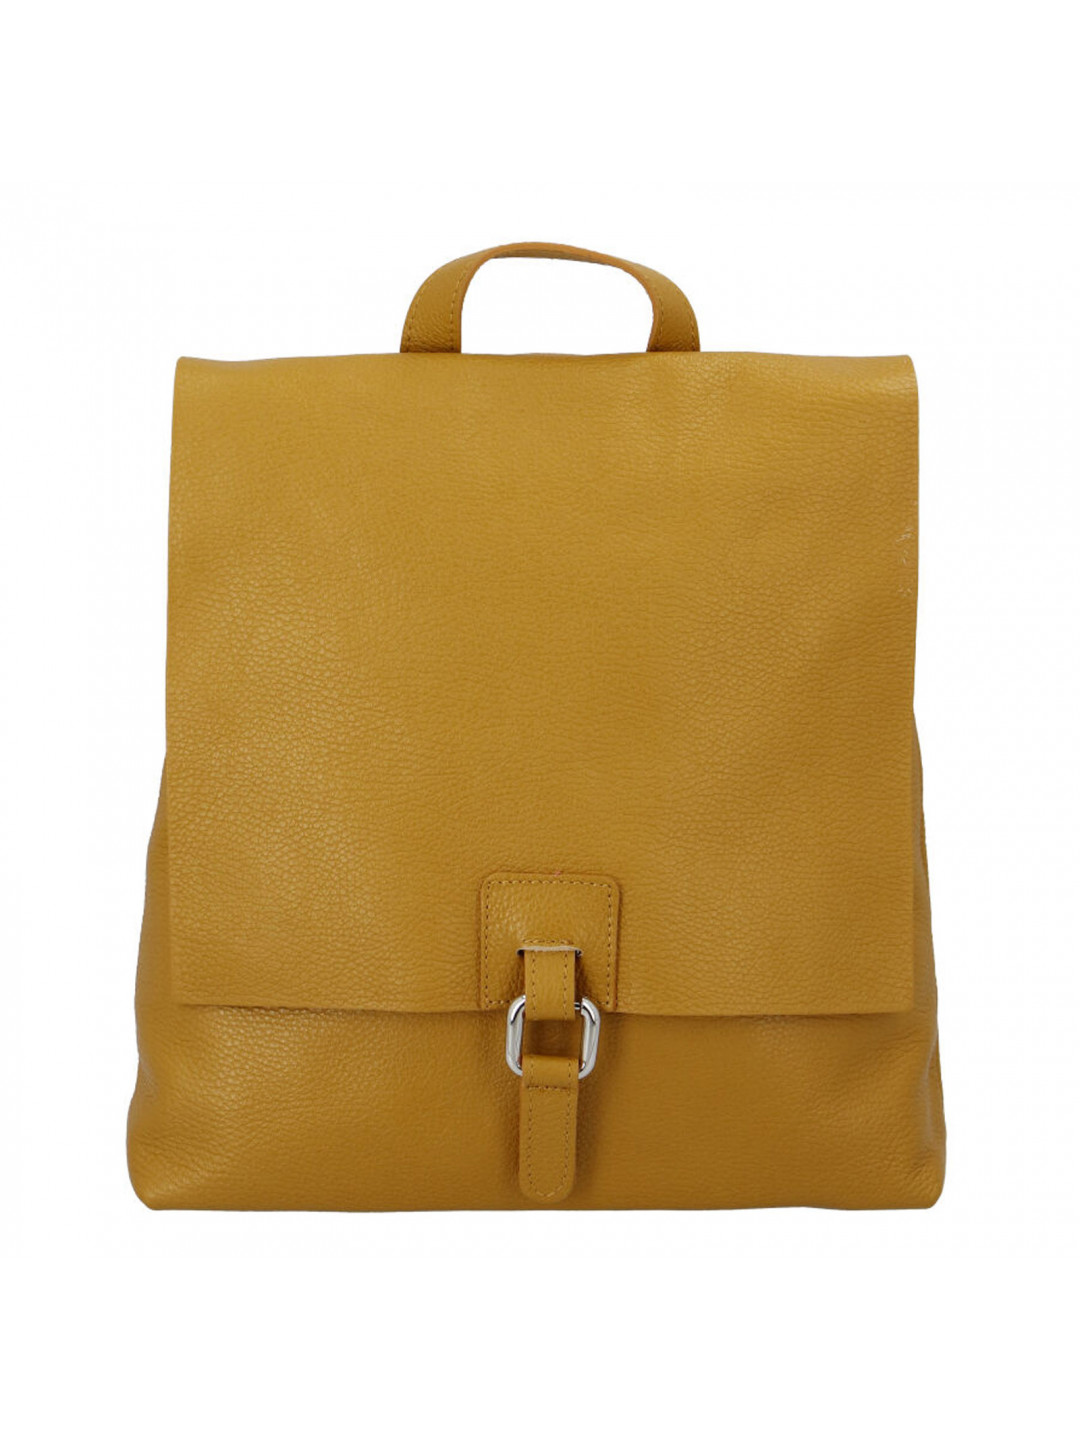 Dámský kožený batůžek kabelka žlutý – ItalY Francesco